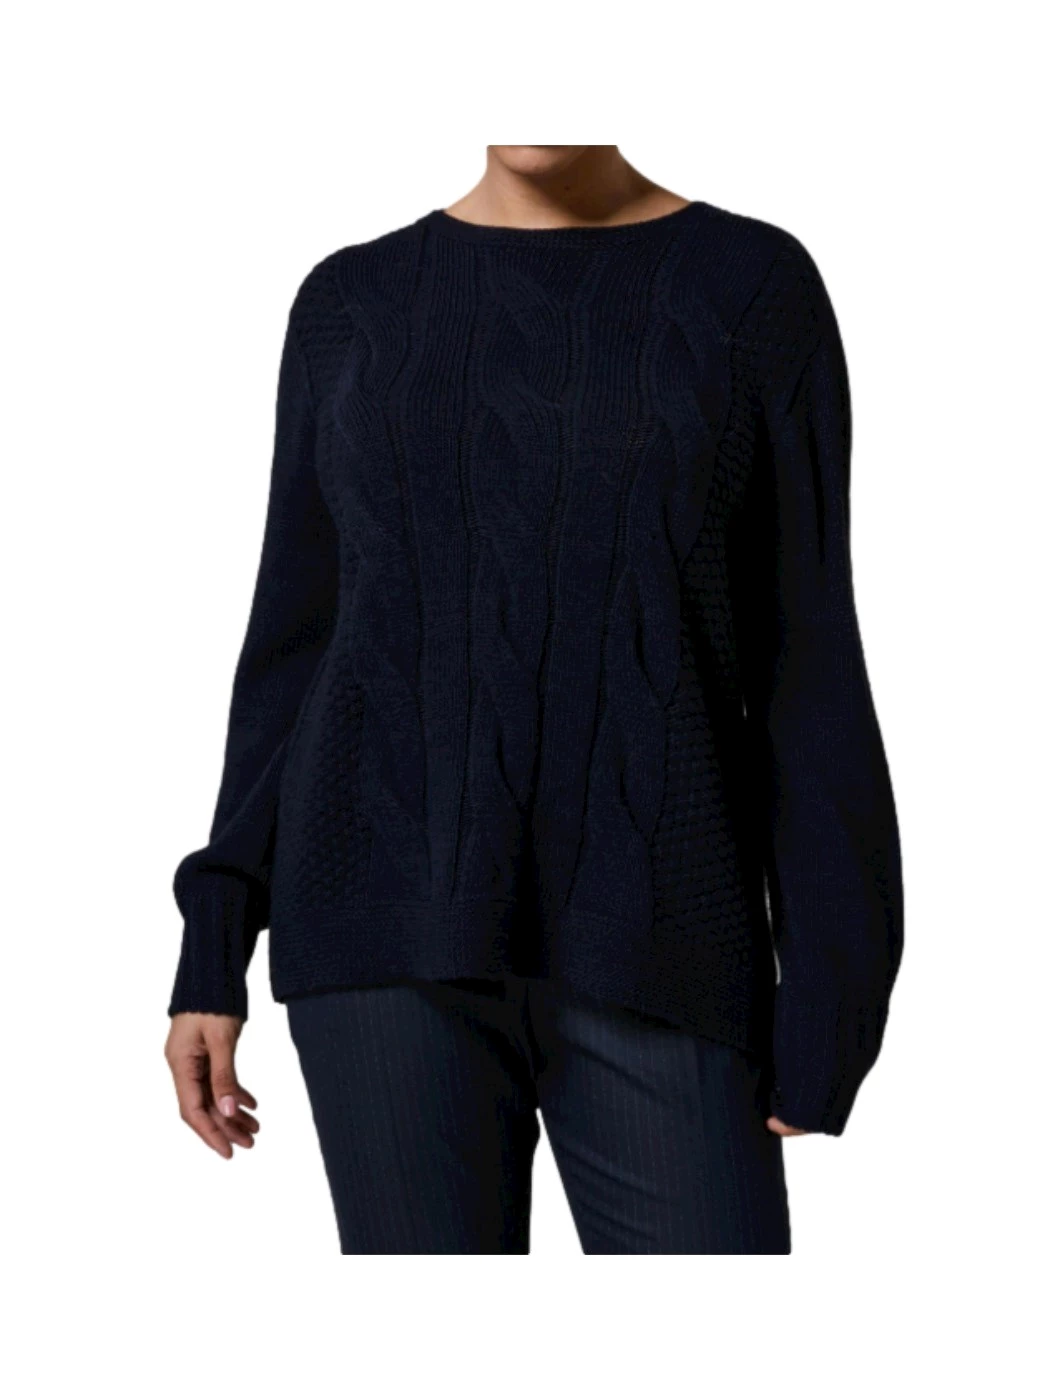 Marina Rinaldi wool blend sweater